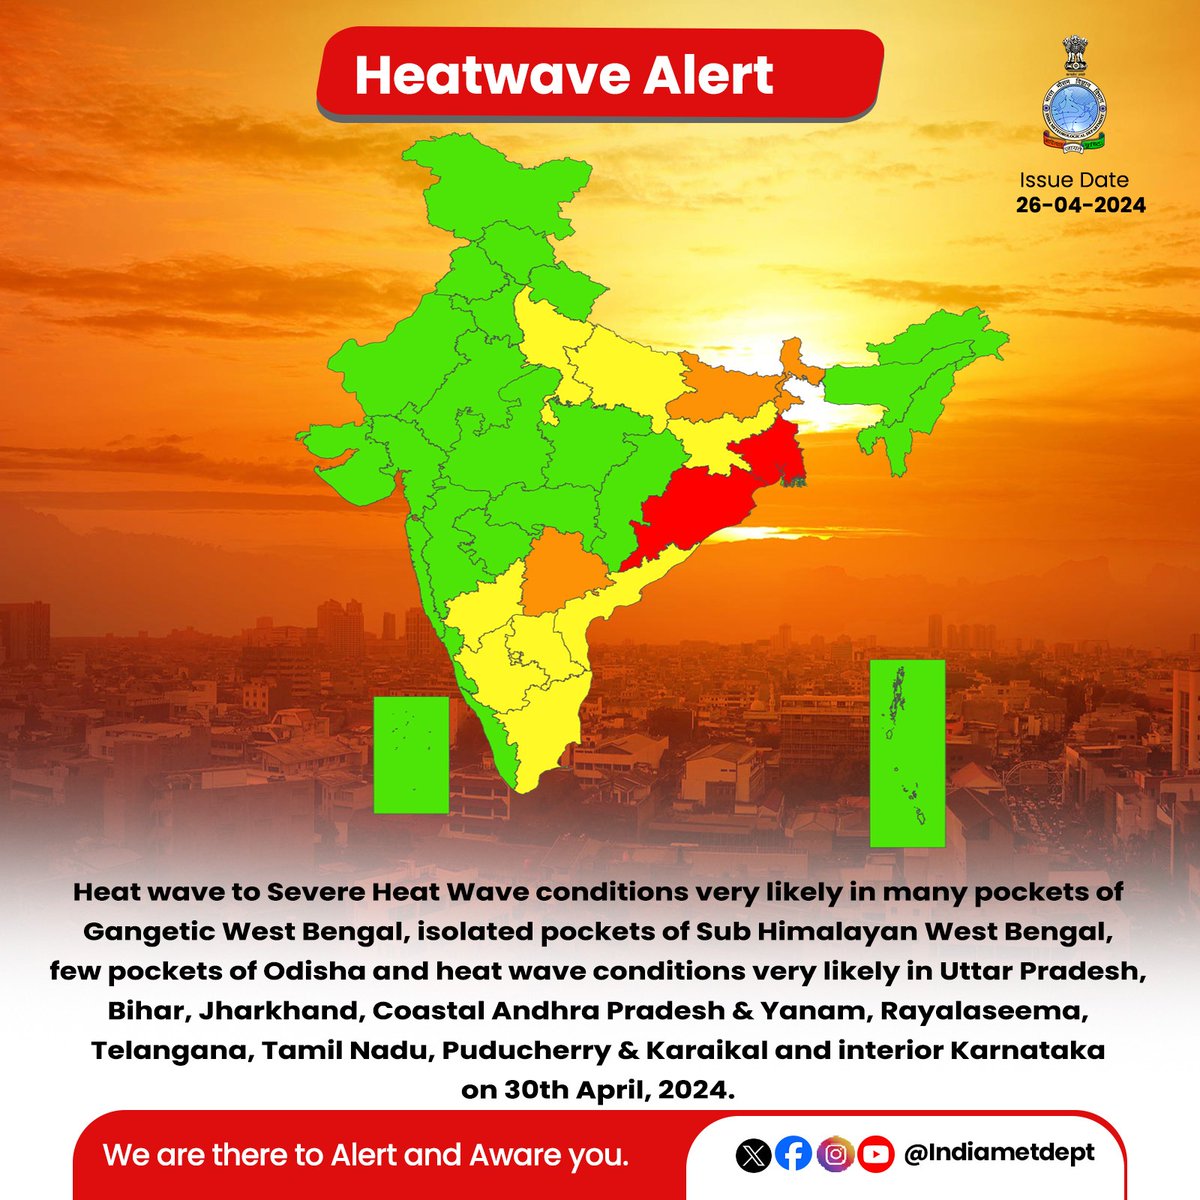 Heat wave to Severe Heat Wave conditions very likely in many pockets of Gangetic West Bengal, isolated pockets of Sub Himalayan West Bengal, few pockets of Odisha and heat wave conditions very likely in Uttar Pradesh, Bihar, Jharkhand, Coastal Andhra Pradesh & Yanam....